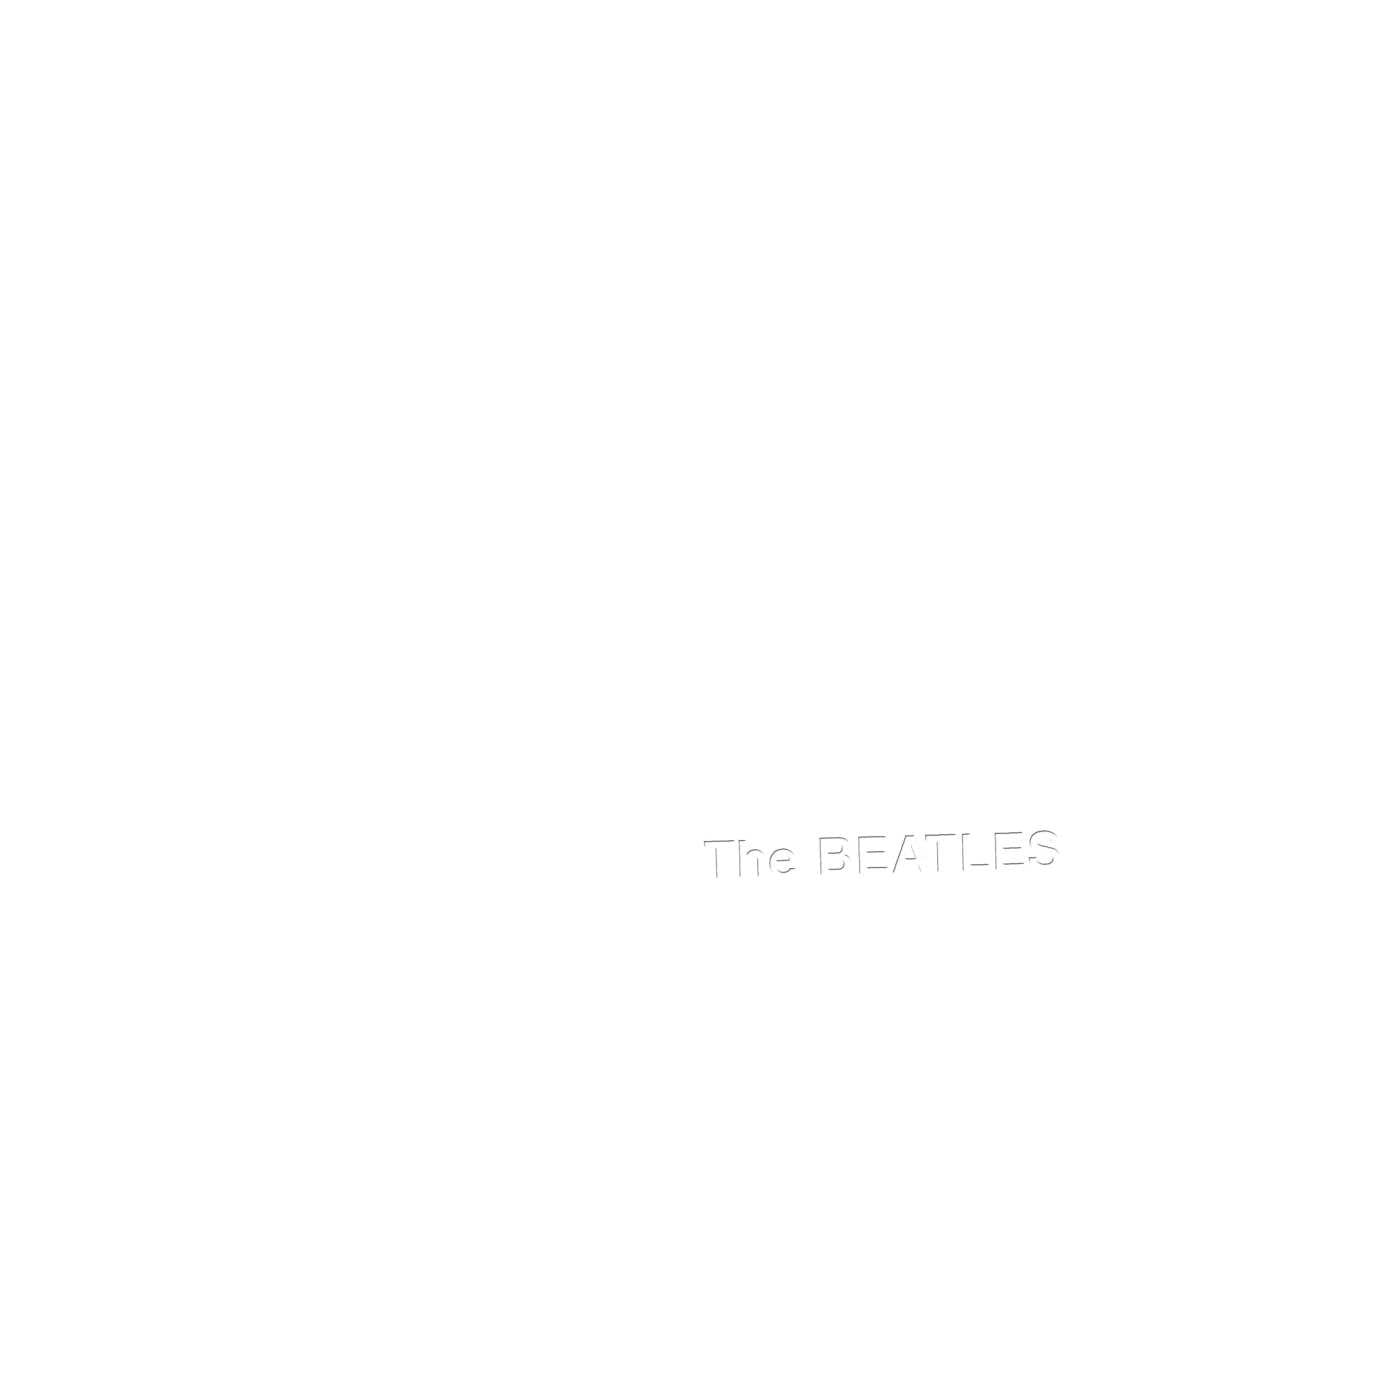 The Beatles — The Beatles ["the white album"]